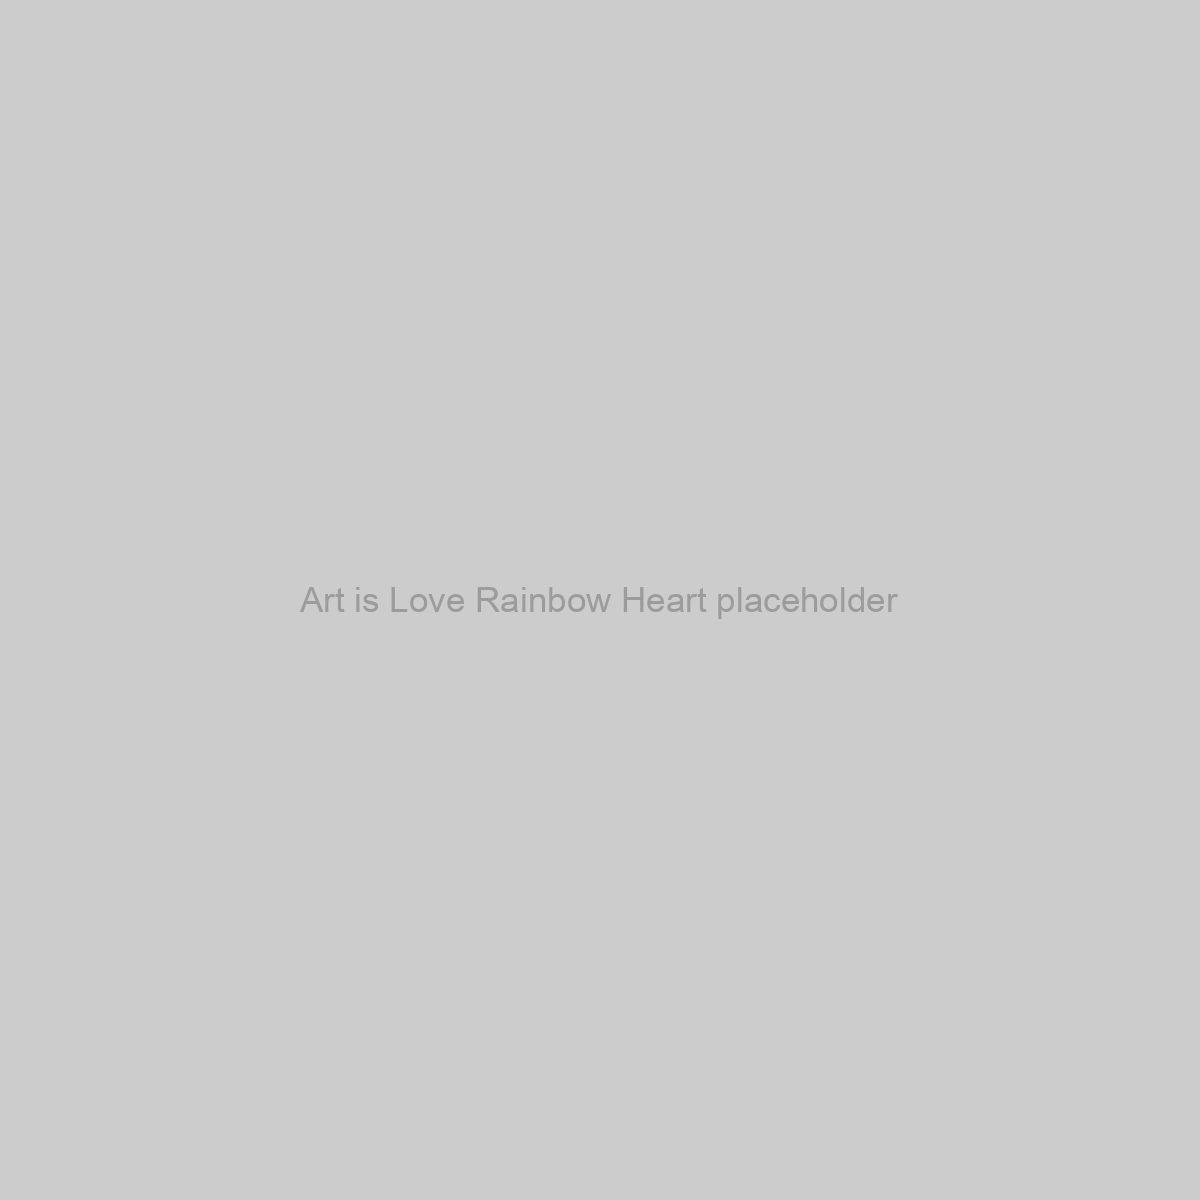 Art is Love Rainbow Heart Placeholder Image